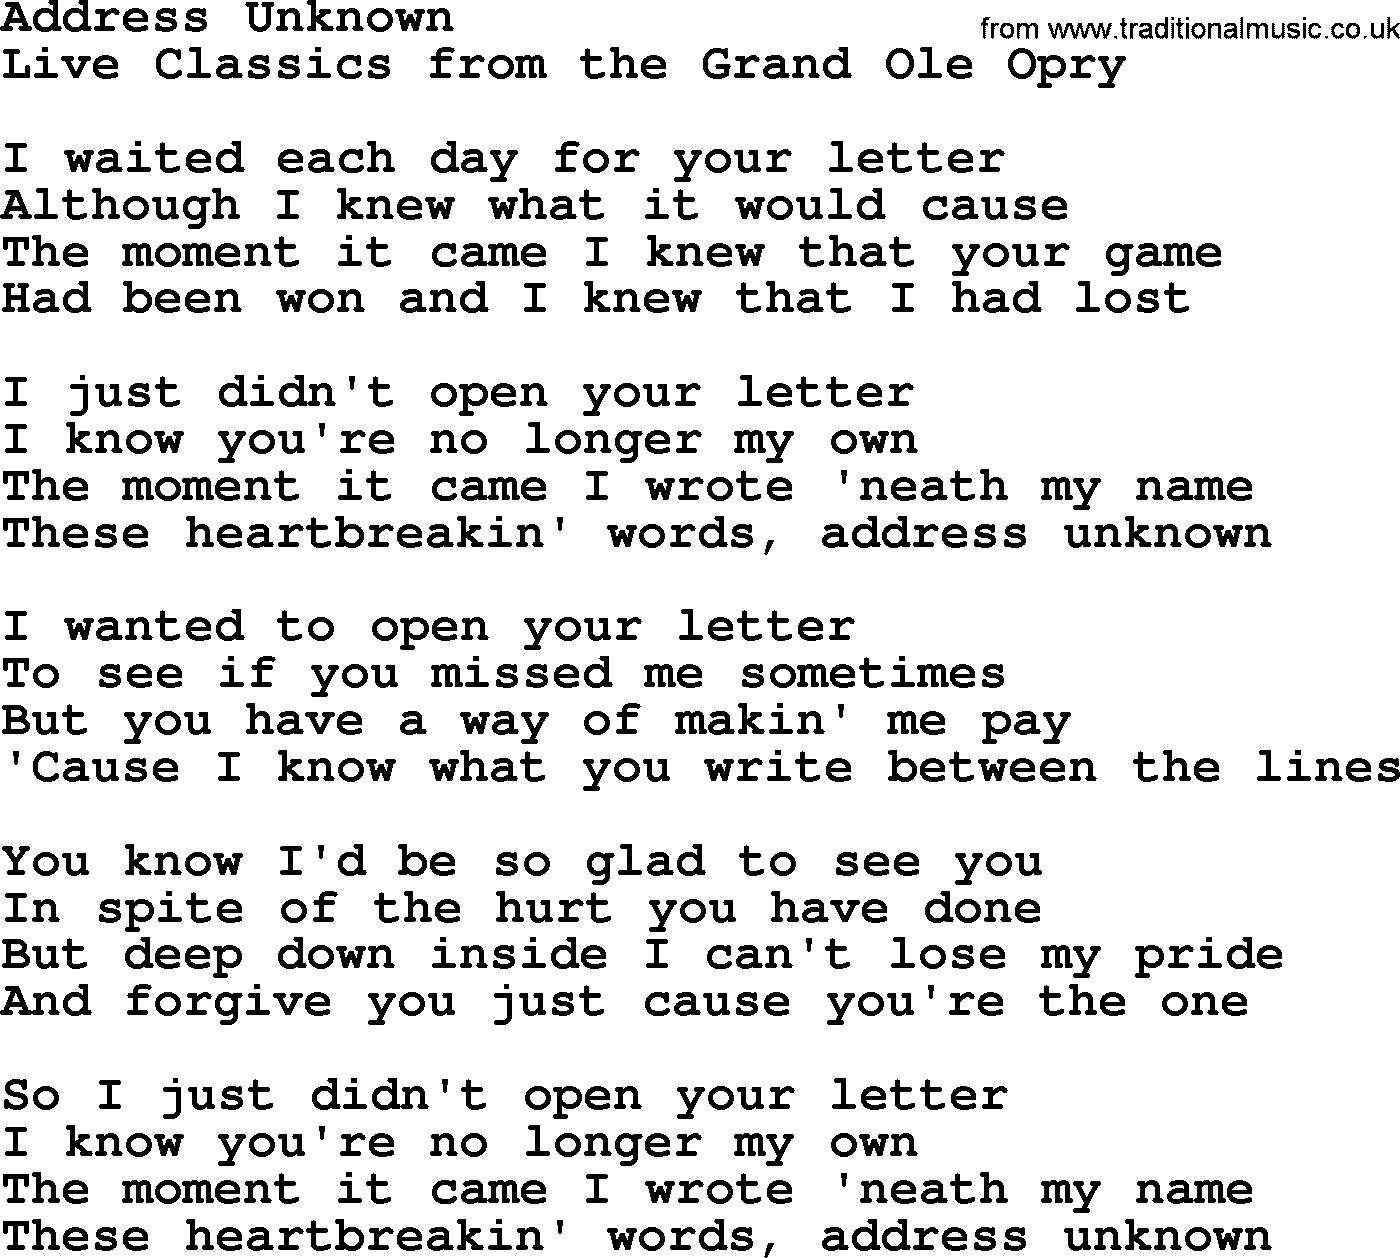 Marty Robbins song: Address Unknown, lyrics